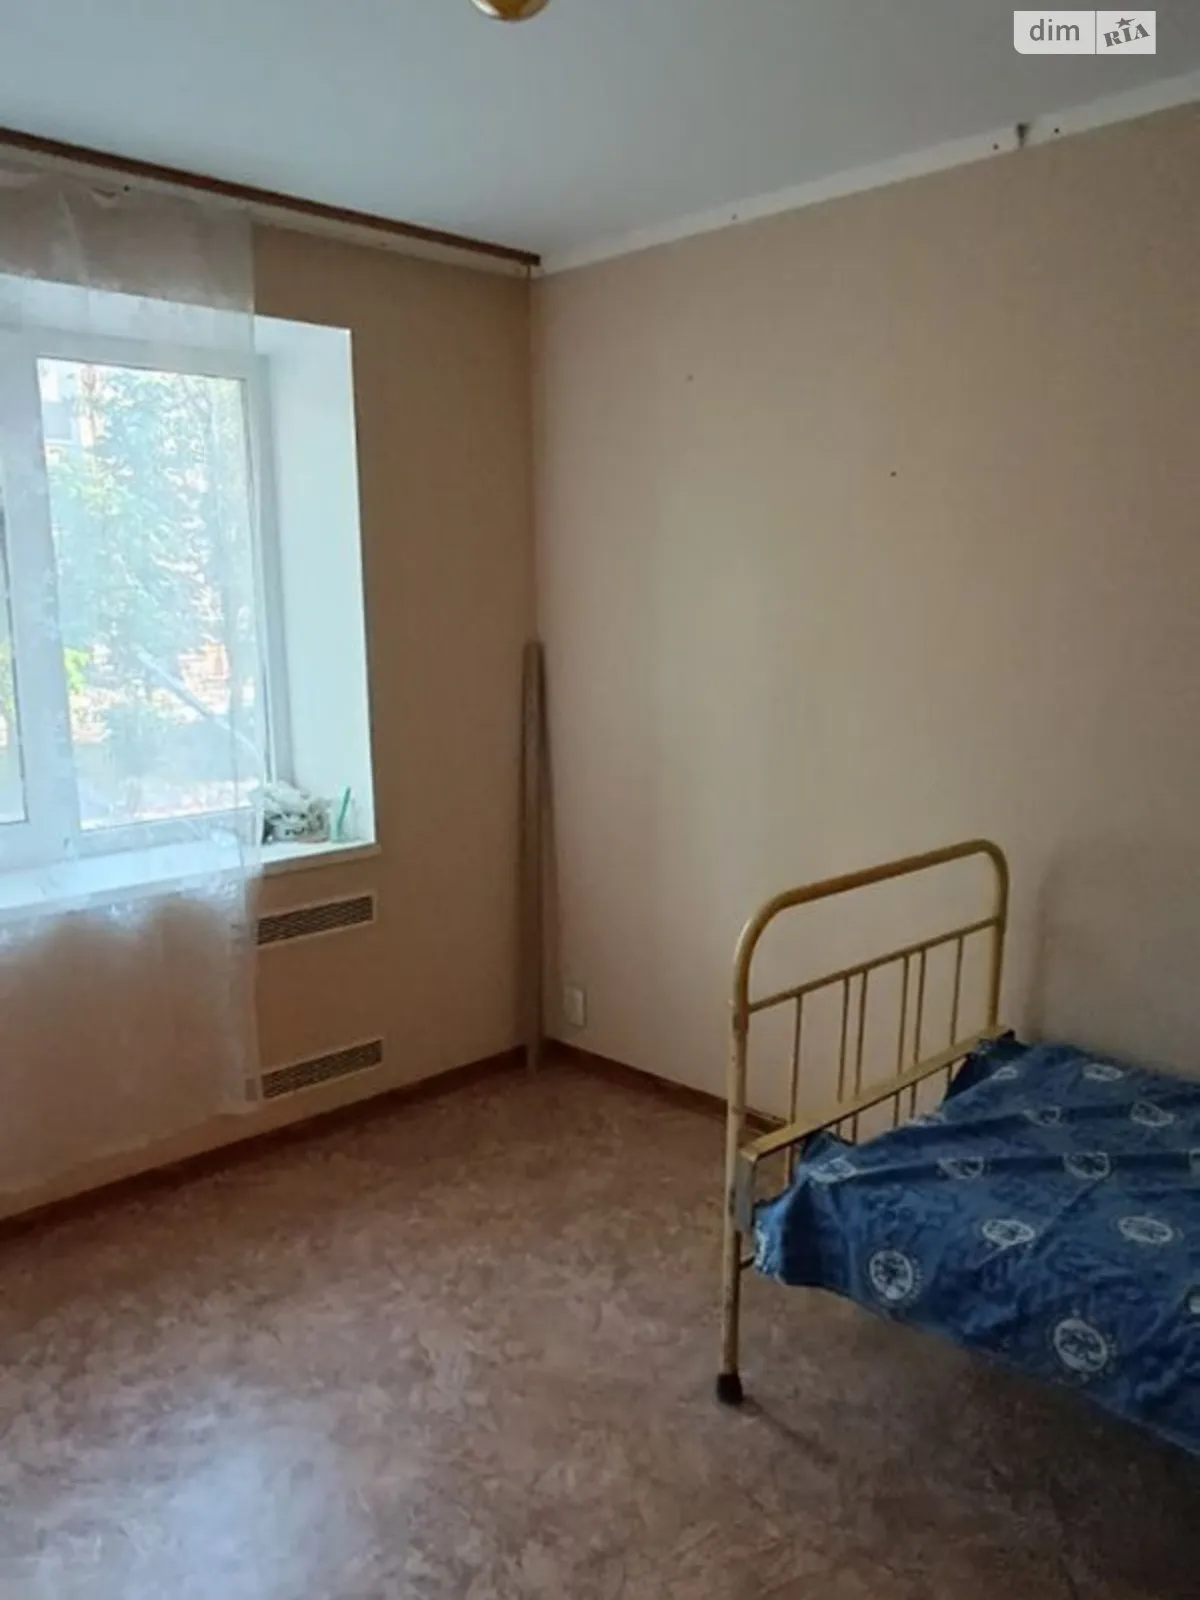 Продается комната 20 кв. м в Николаеве - фото 3